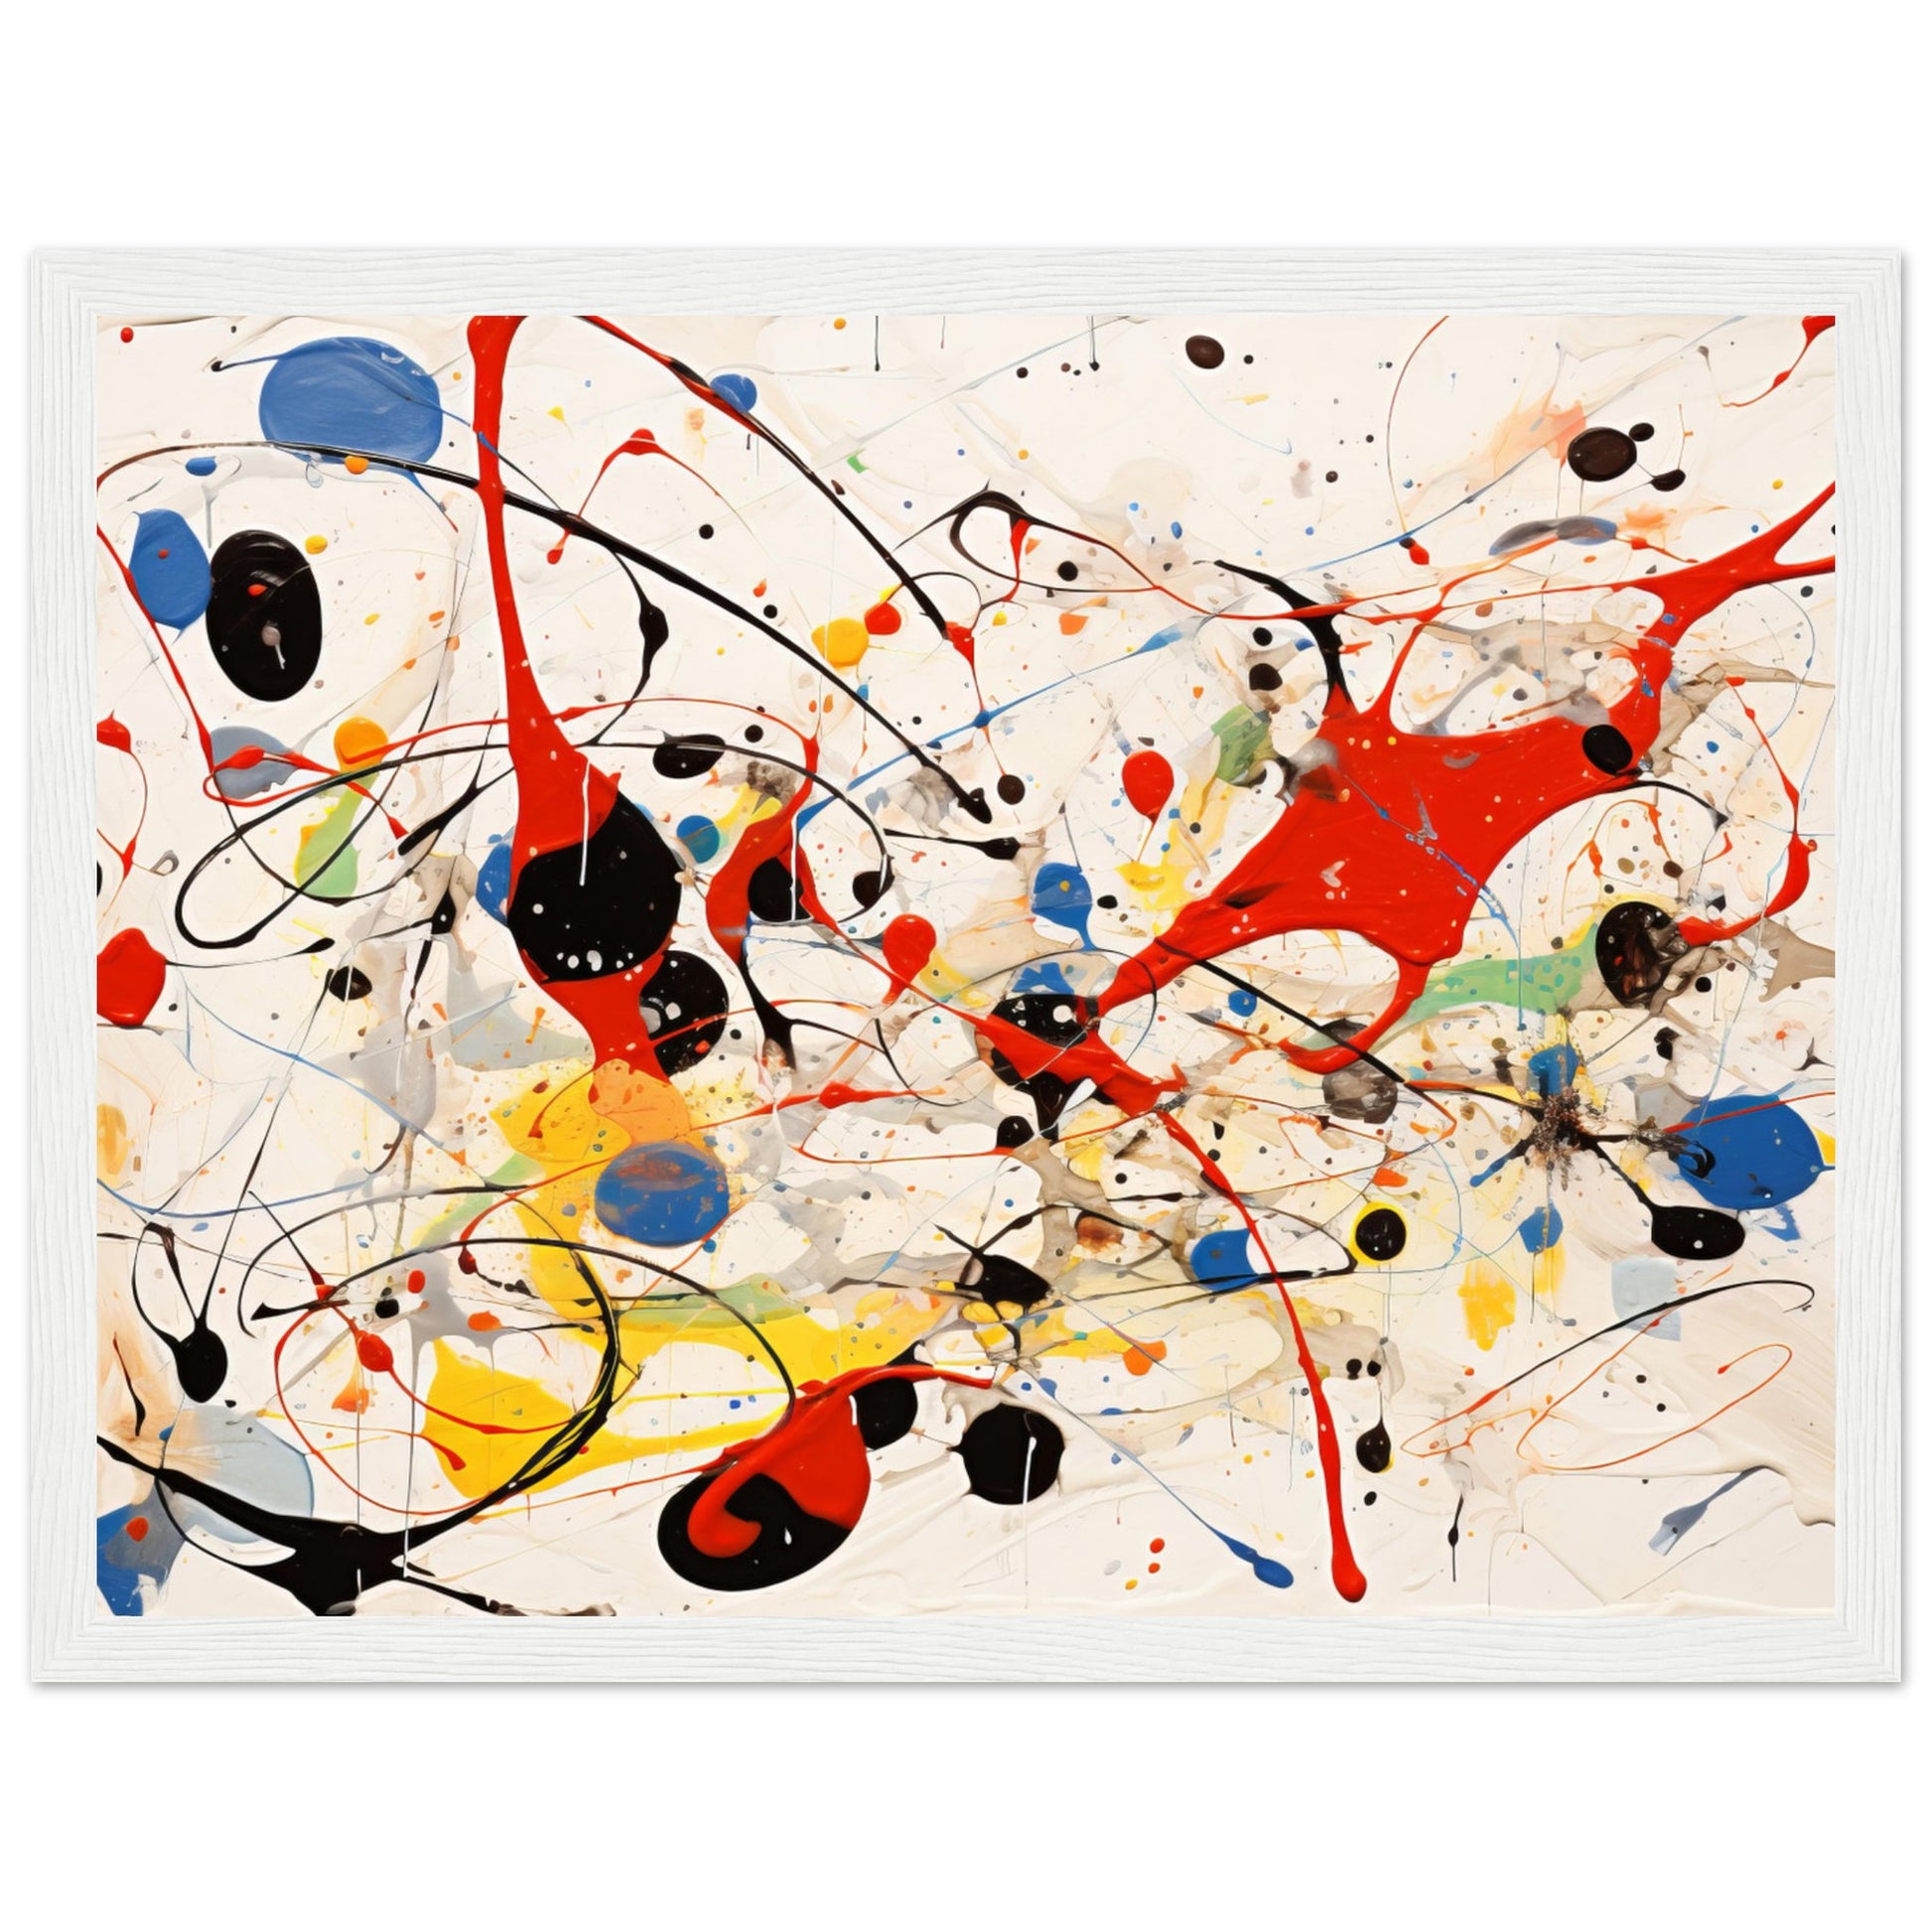 Pollock Abstract #09 - Art Print Black frame 70x100 cm / 28x40"